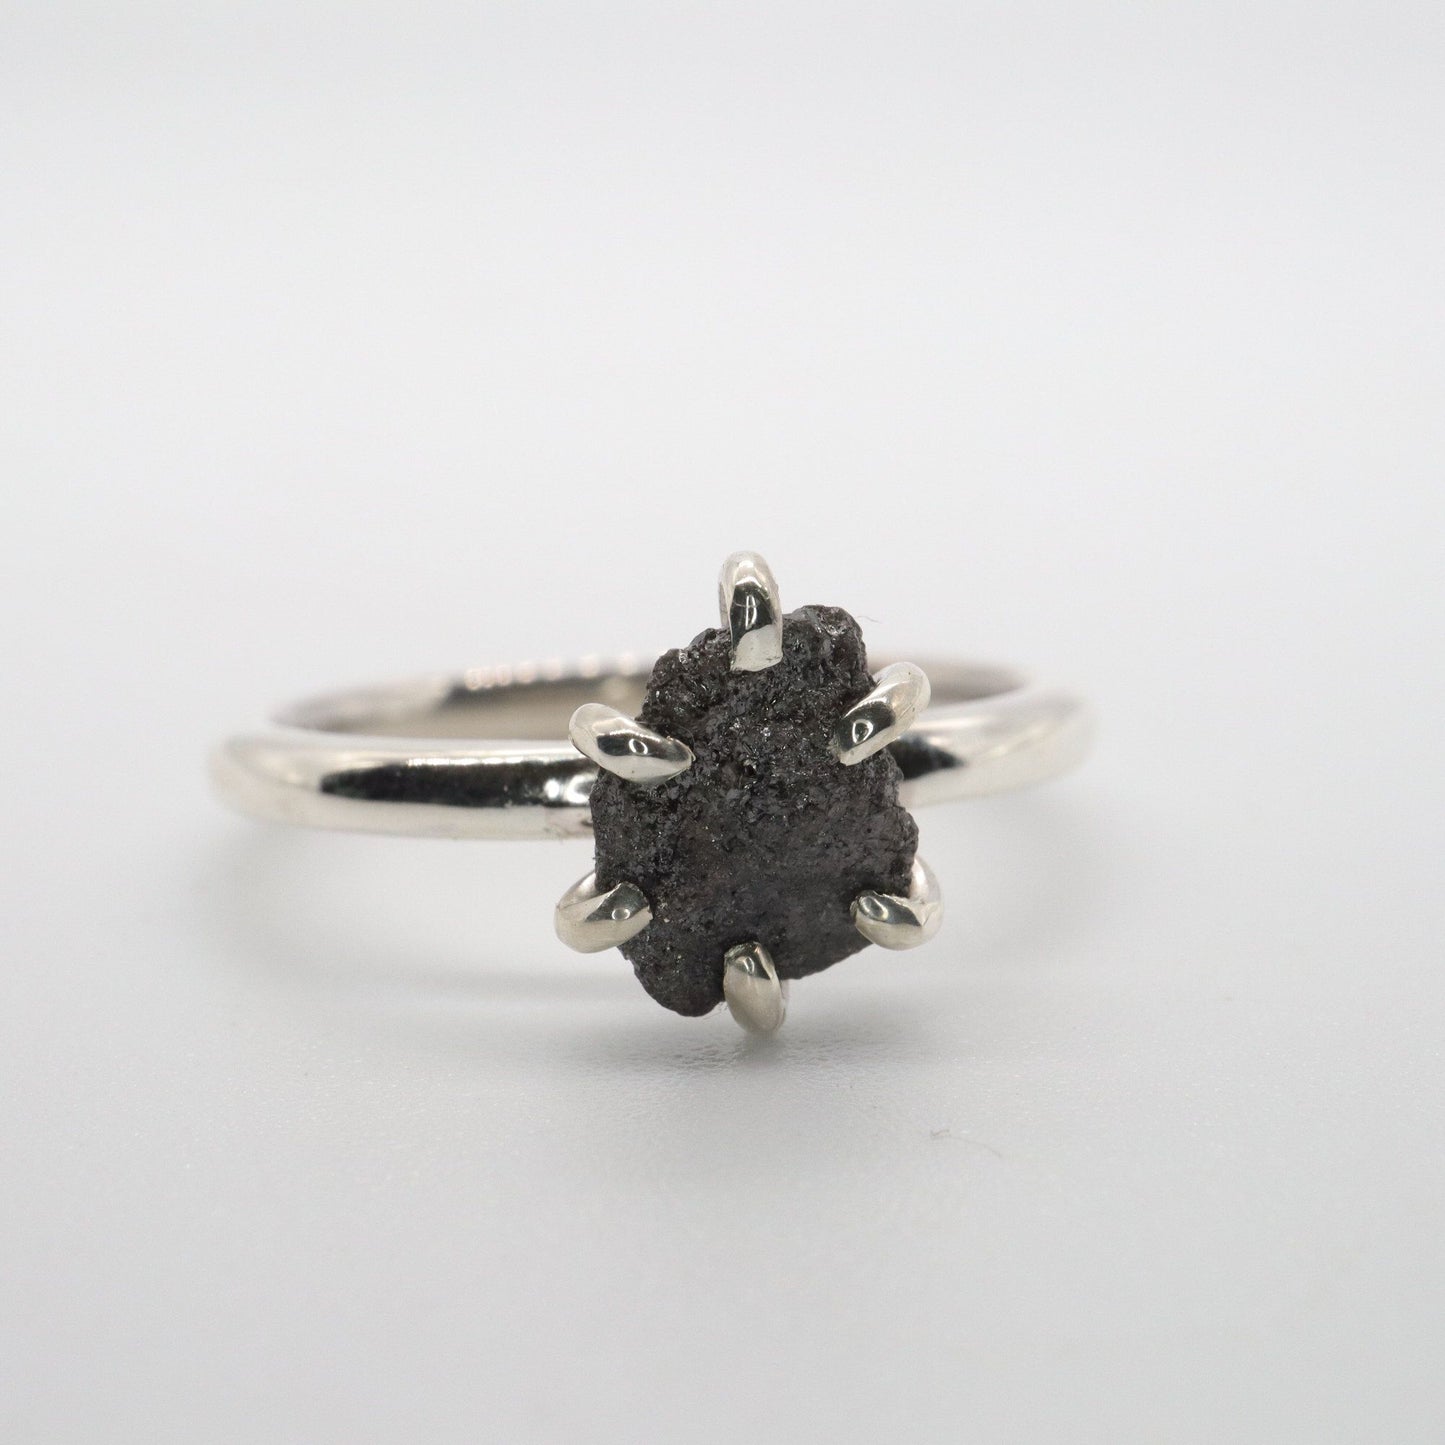 Black uncut raw diamond solitaire rustic ring, 1.14ct.